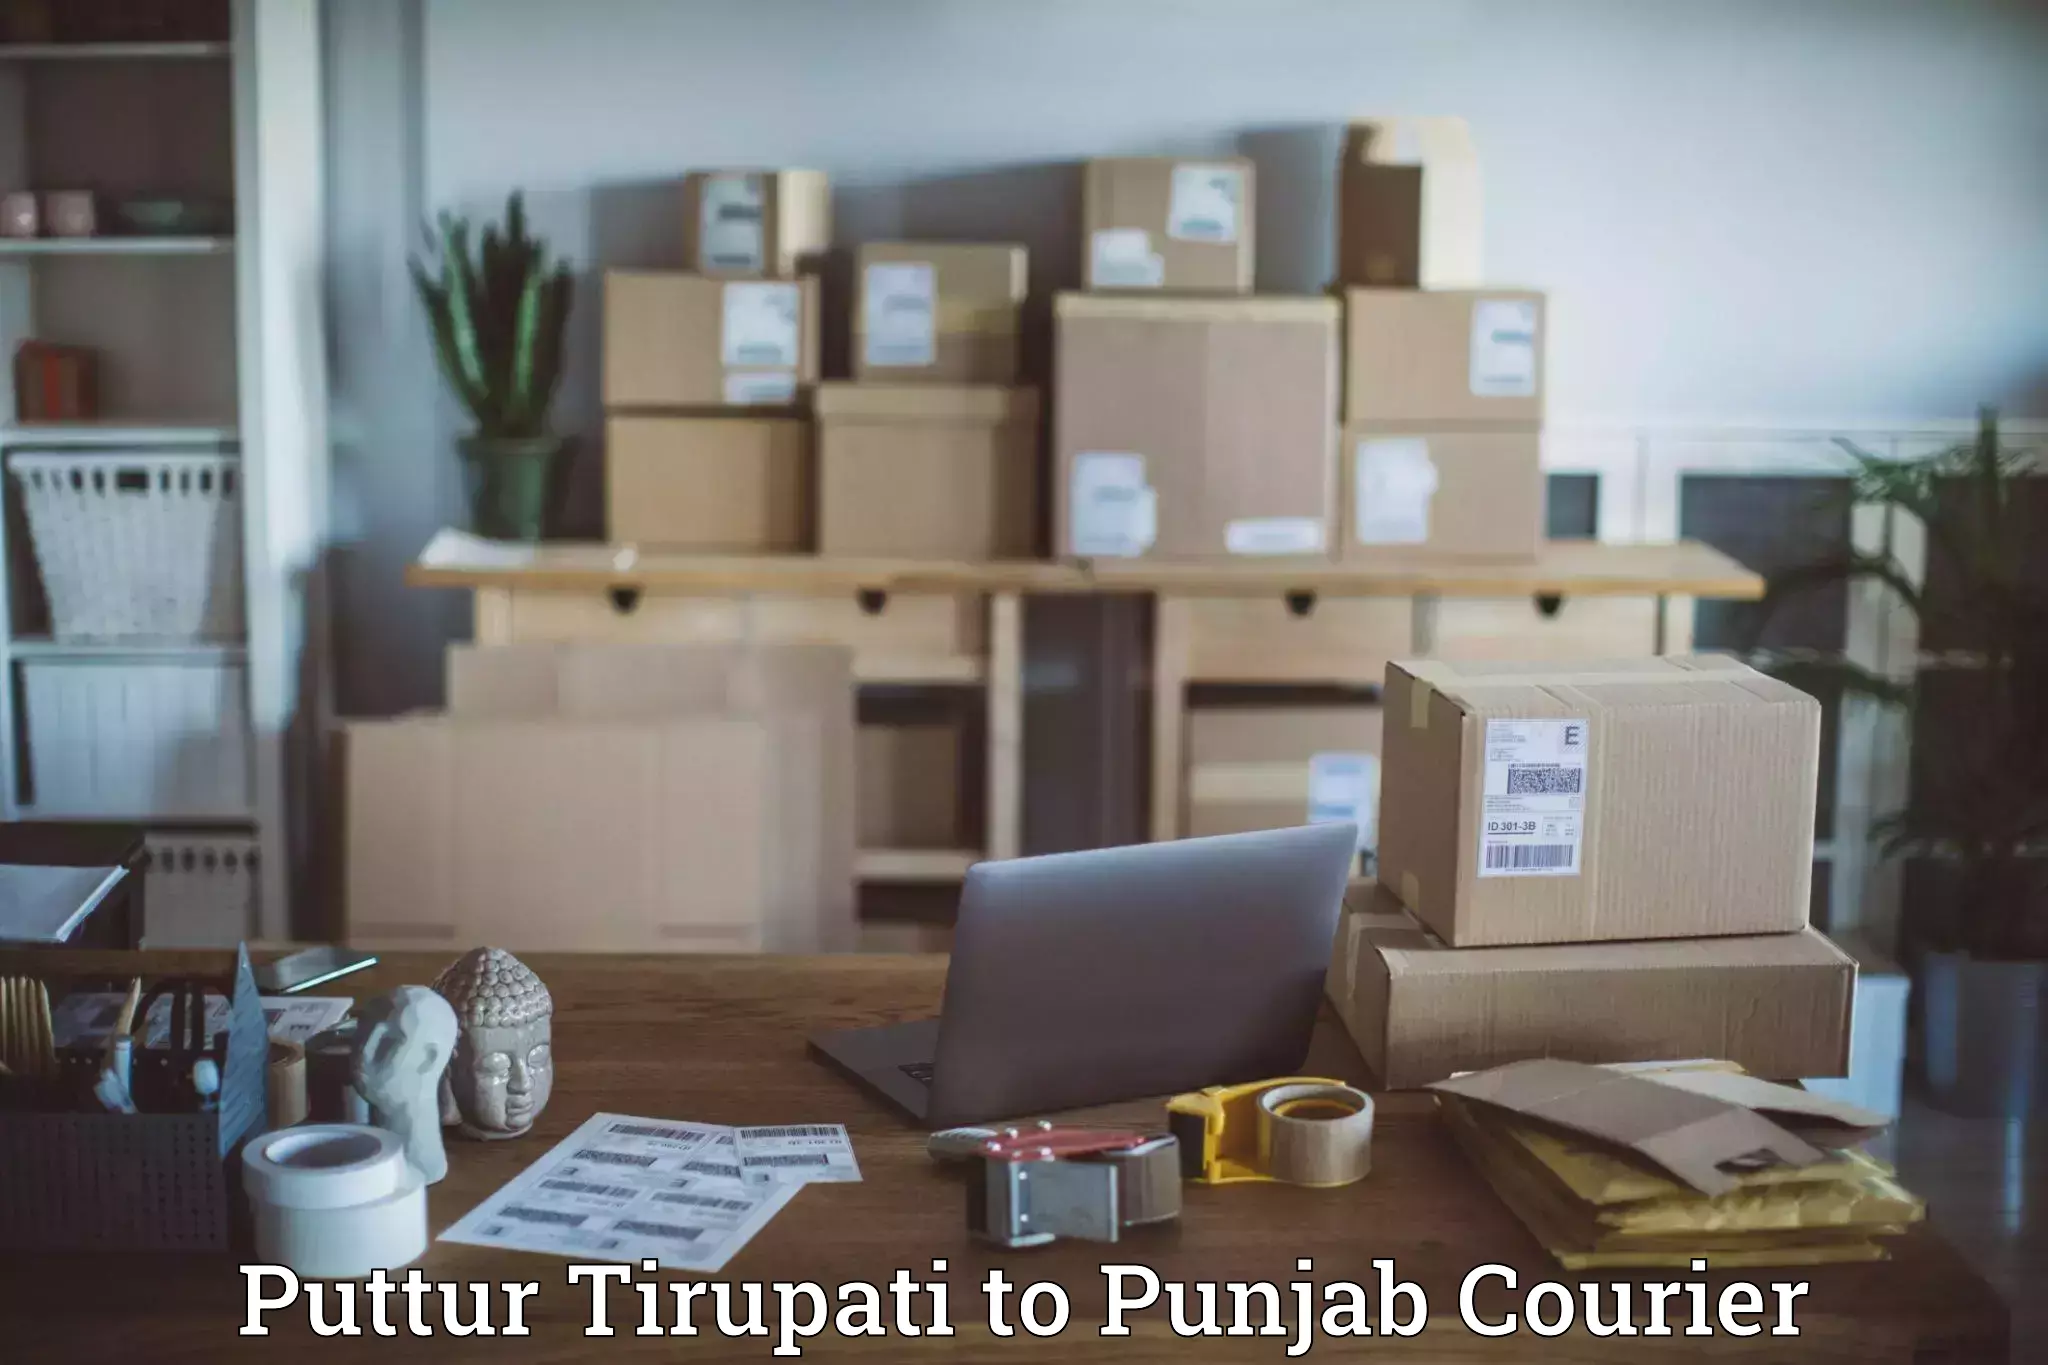 Efficient order fulfillment Puttur Tirupati to Amritsar